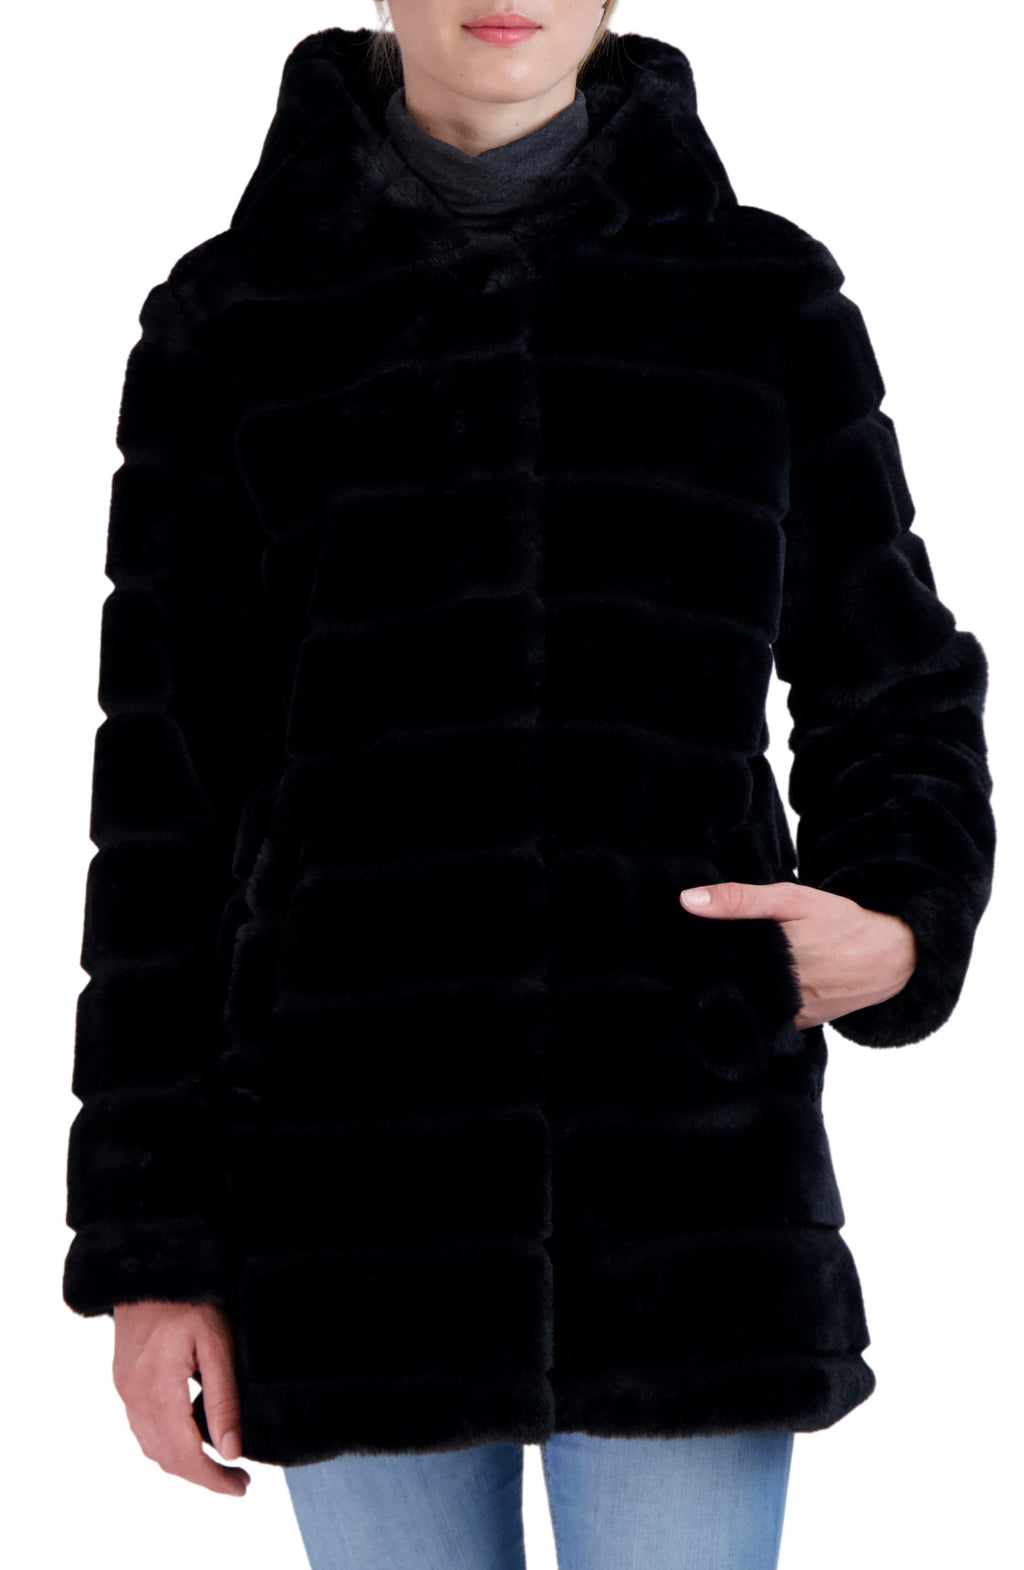 SEBBY Hooded Faux Fur Jacket, Main, color, BLACK